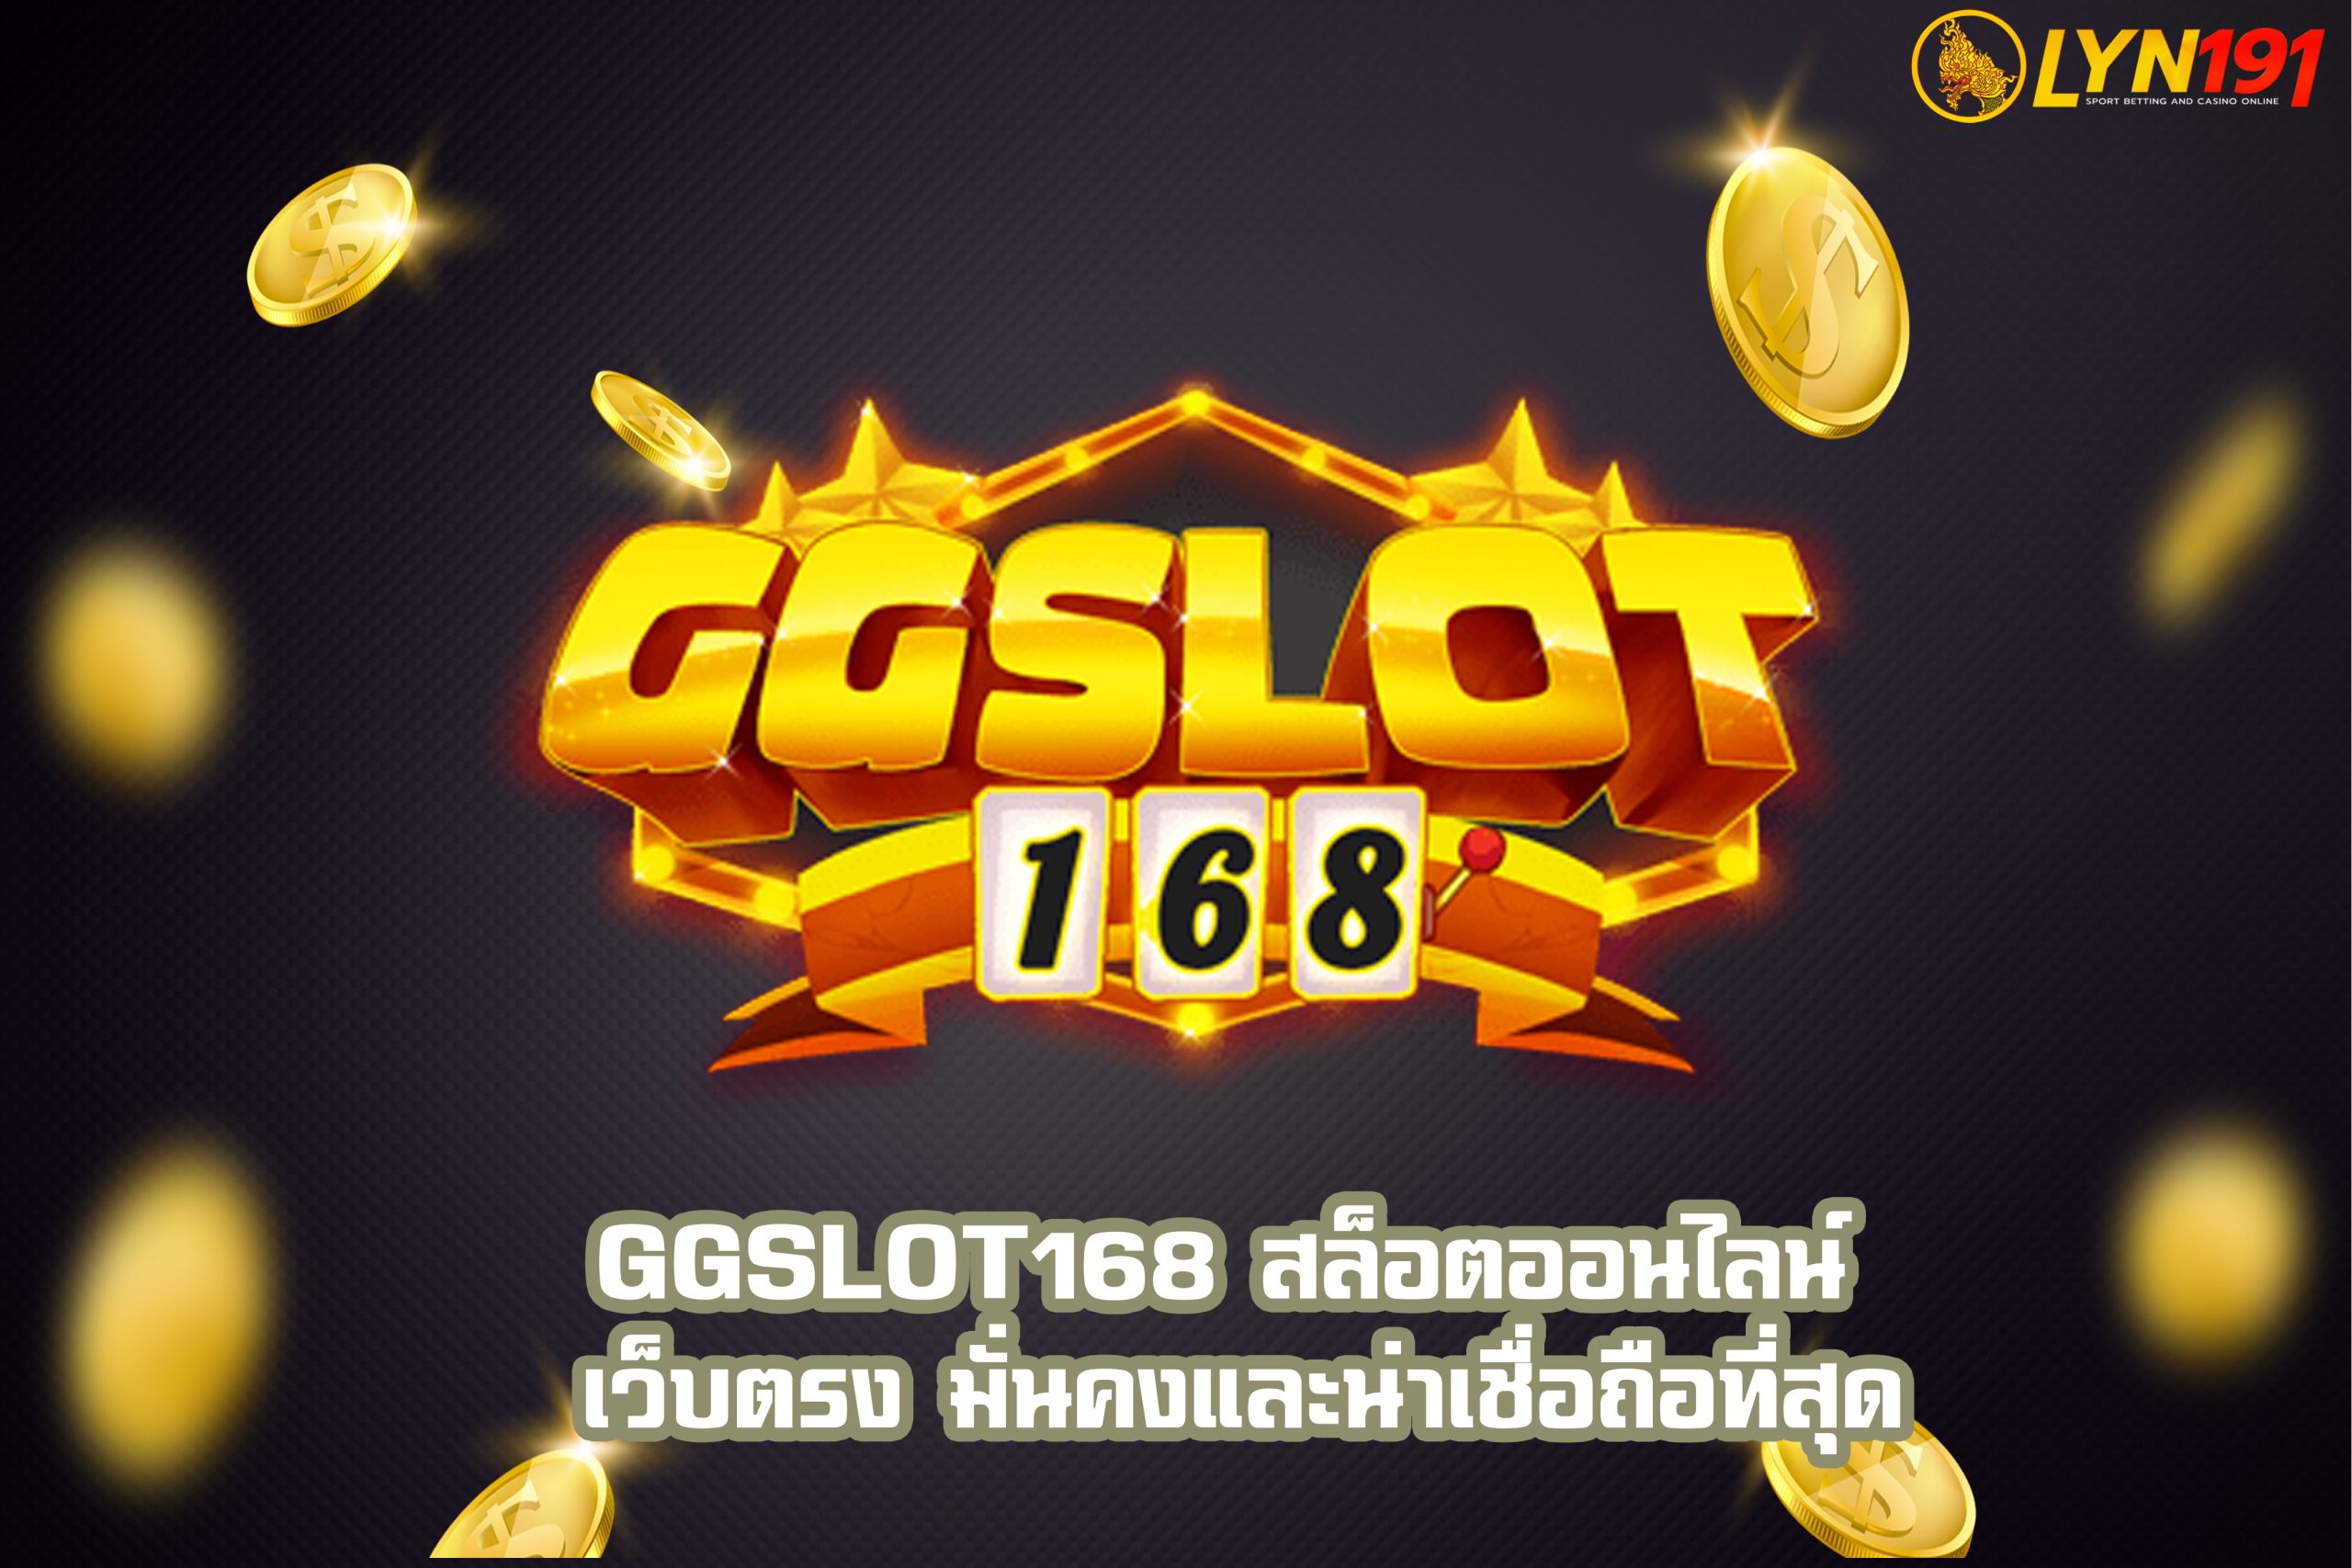 GGSlot168 สล็อตออนไลน์ เว็บตรง มั่นคงและน่าเชื่อถือที่สุด